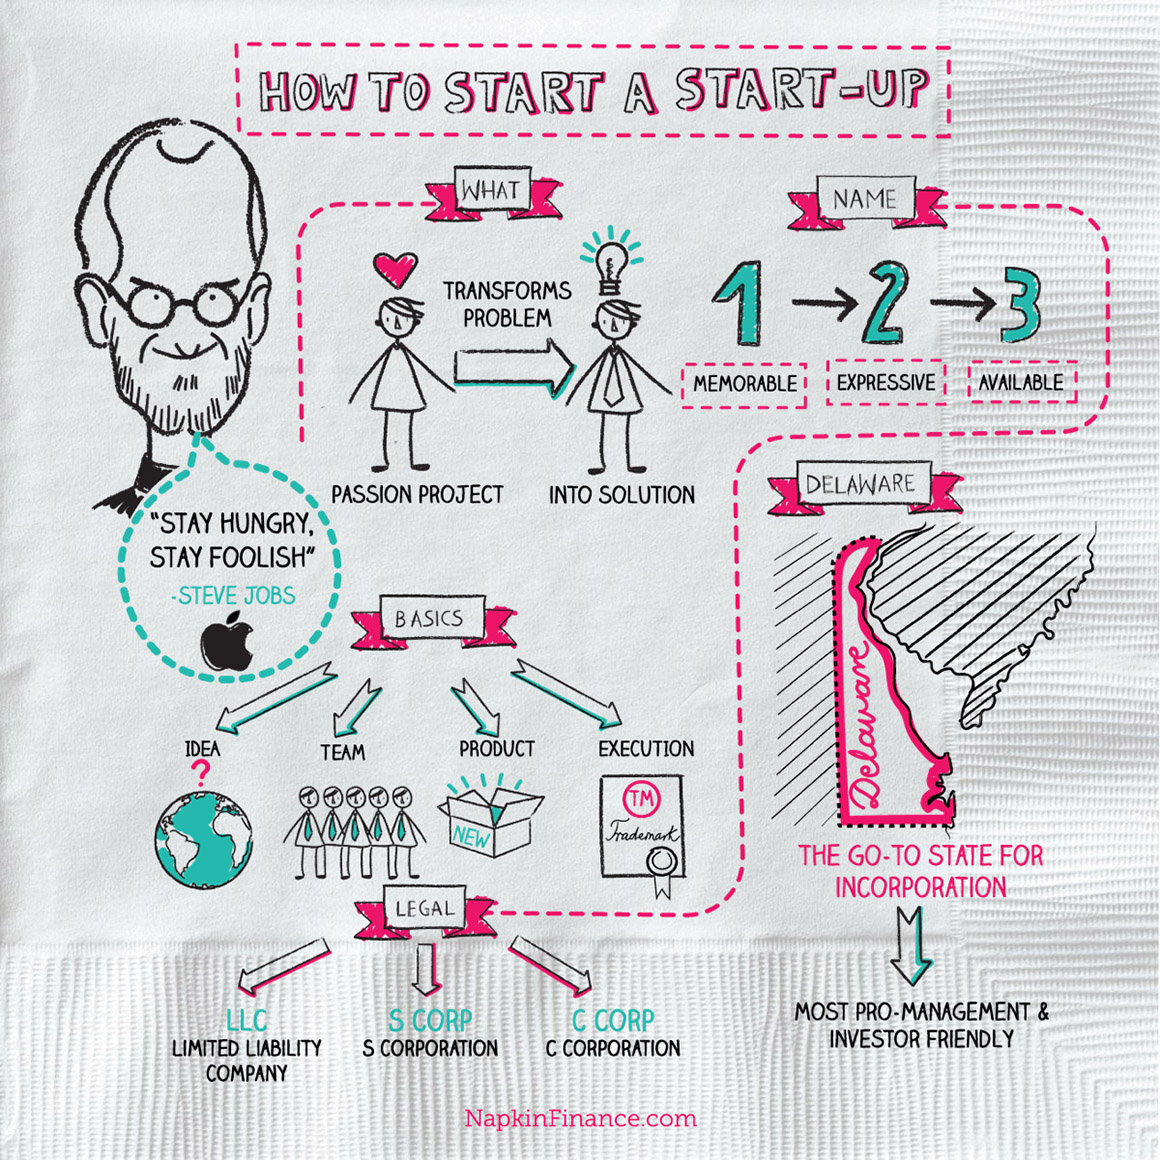 napkin-finance-how-to-start-a-startup